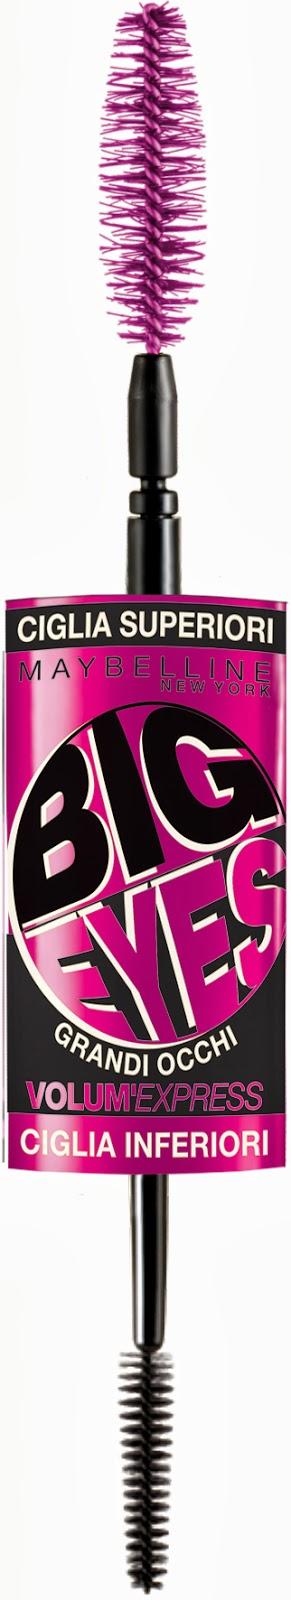 Beauty - Mascara Big Eyes di Maybelline